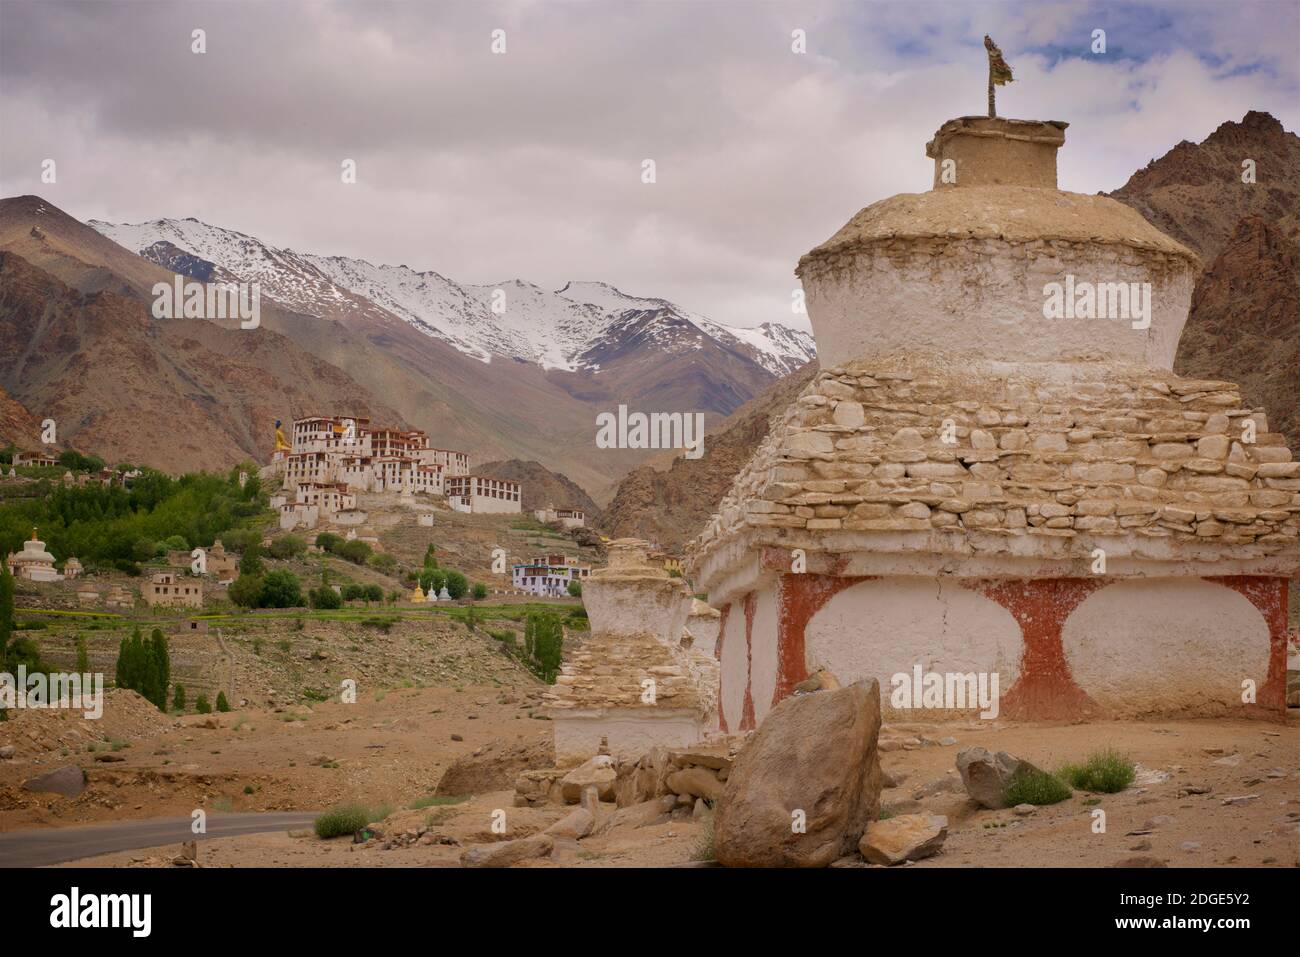 Likir monastery set amongst irrigated fields with mountain peaks beyond. Likir, Ladakh, Jammu and Kashmir, India Stock Photo